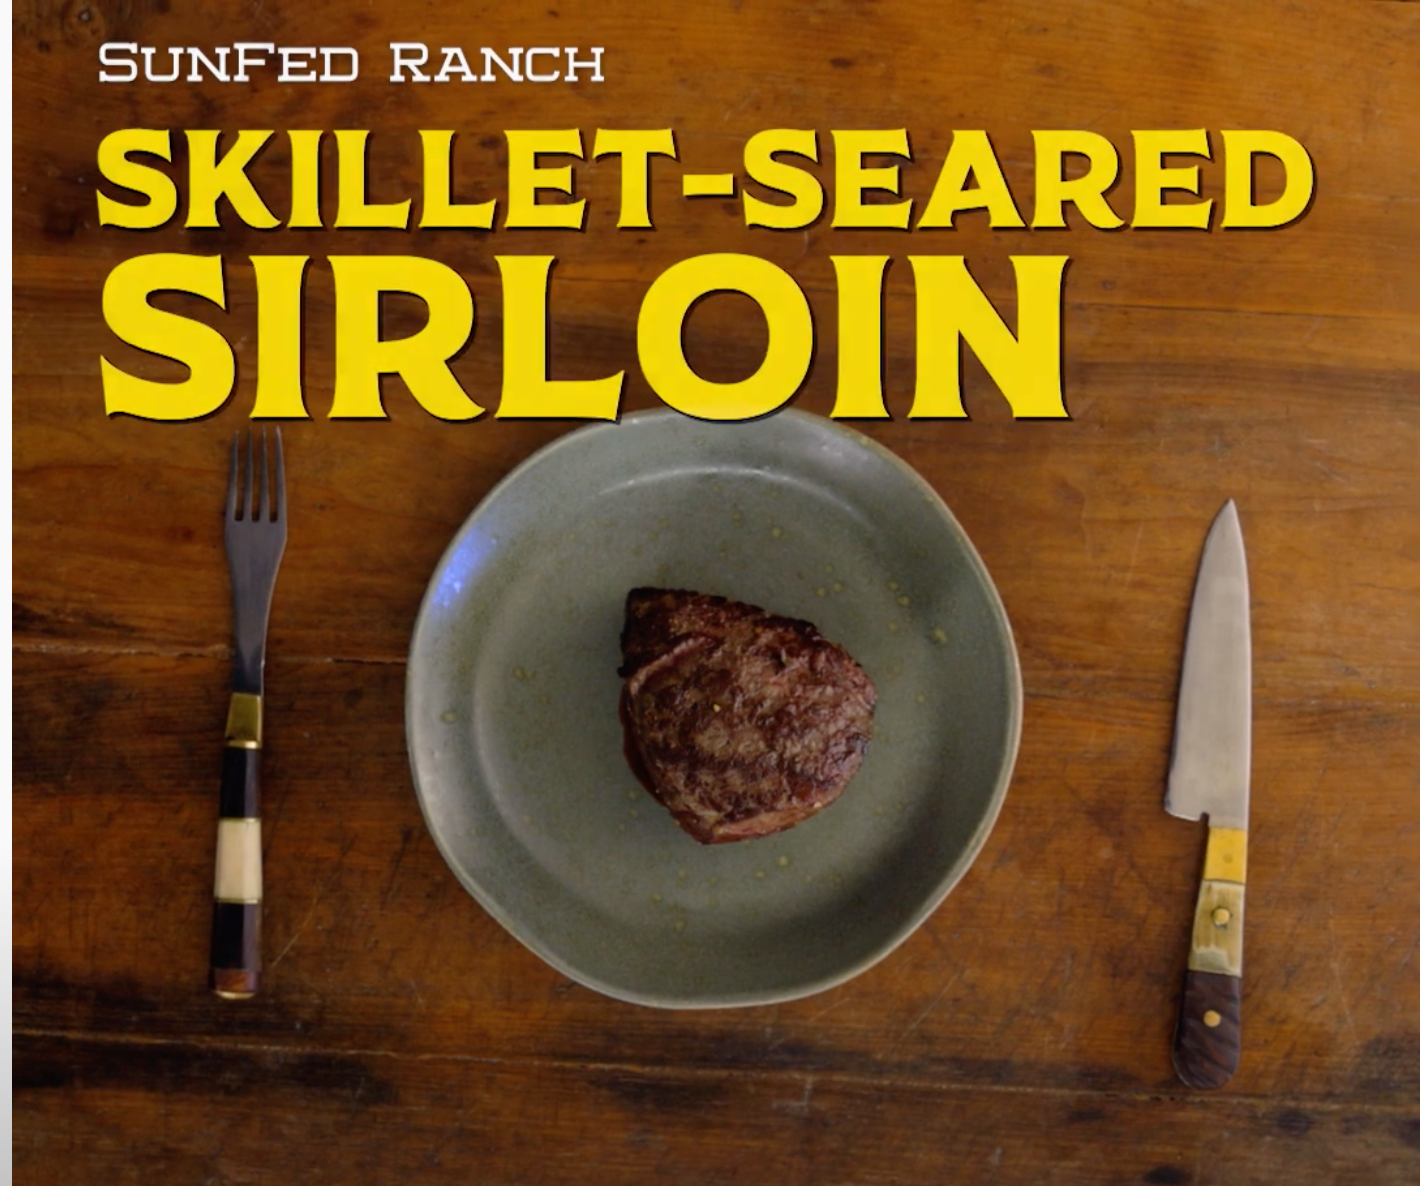 Skillet-Seared Sirloin